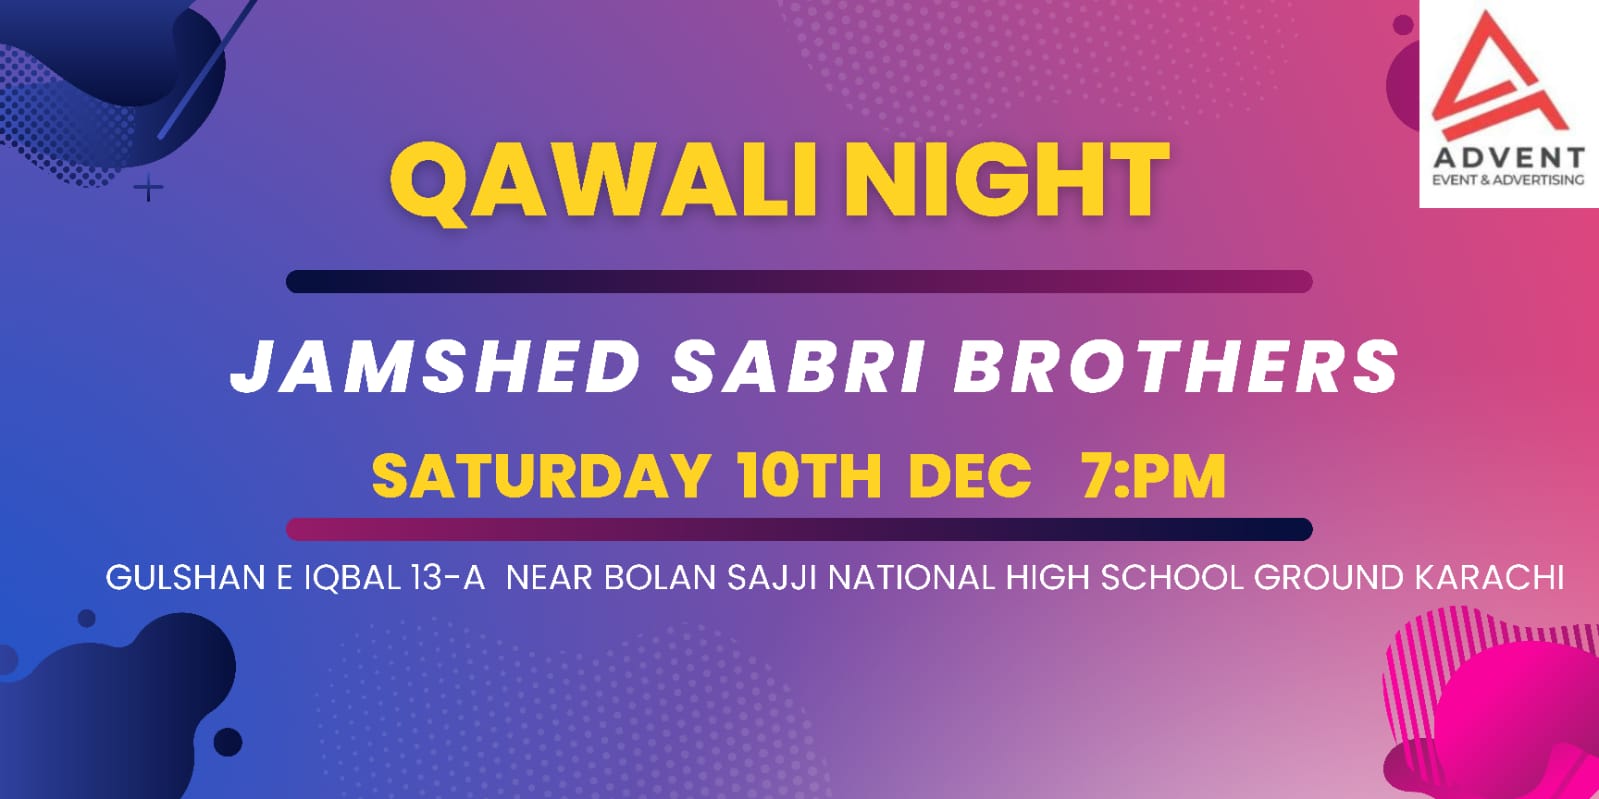 Qawali Night With Jamshed Sabri Brothers